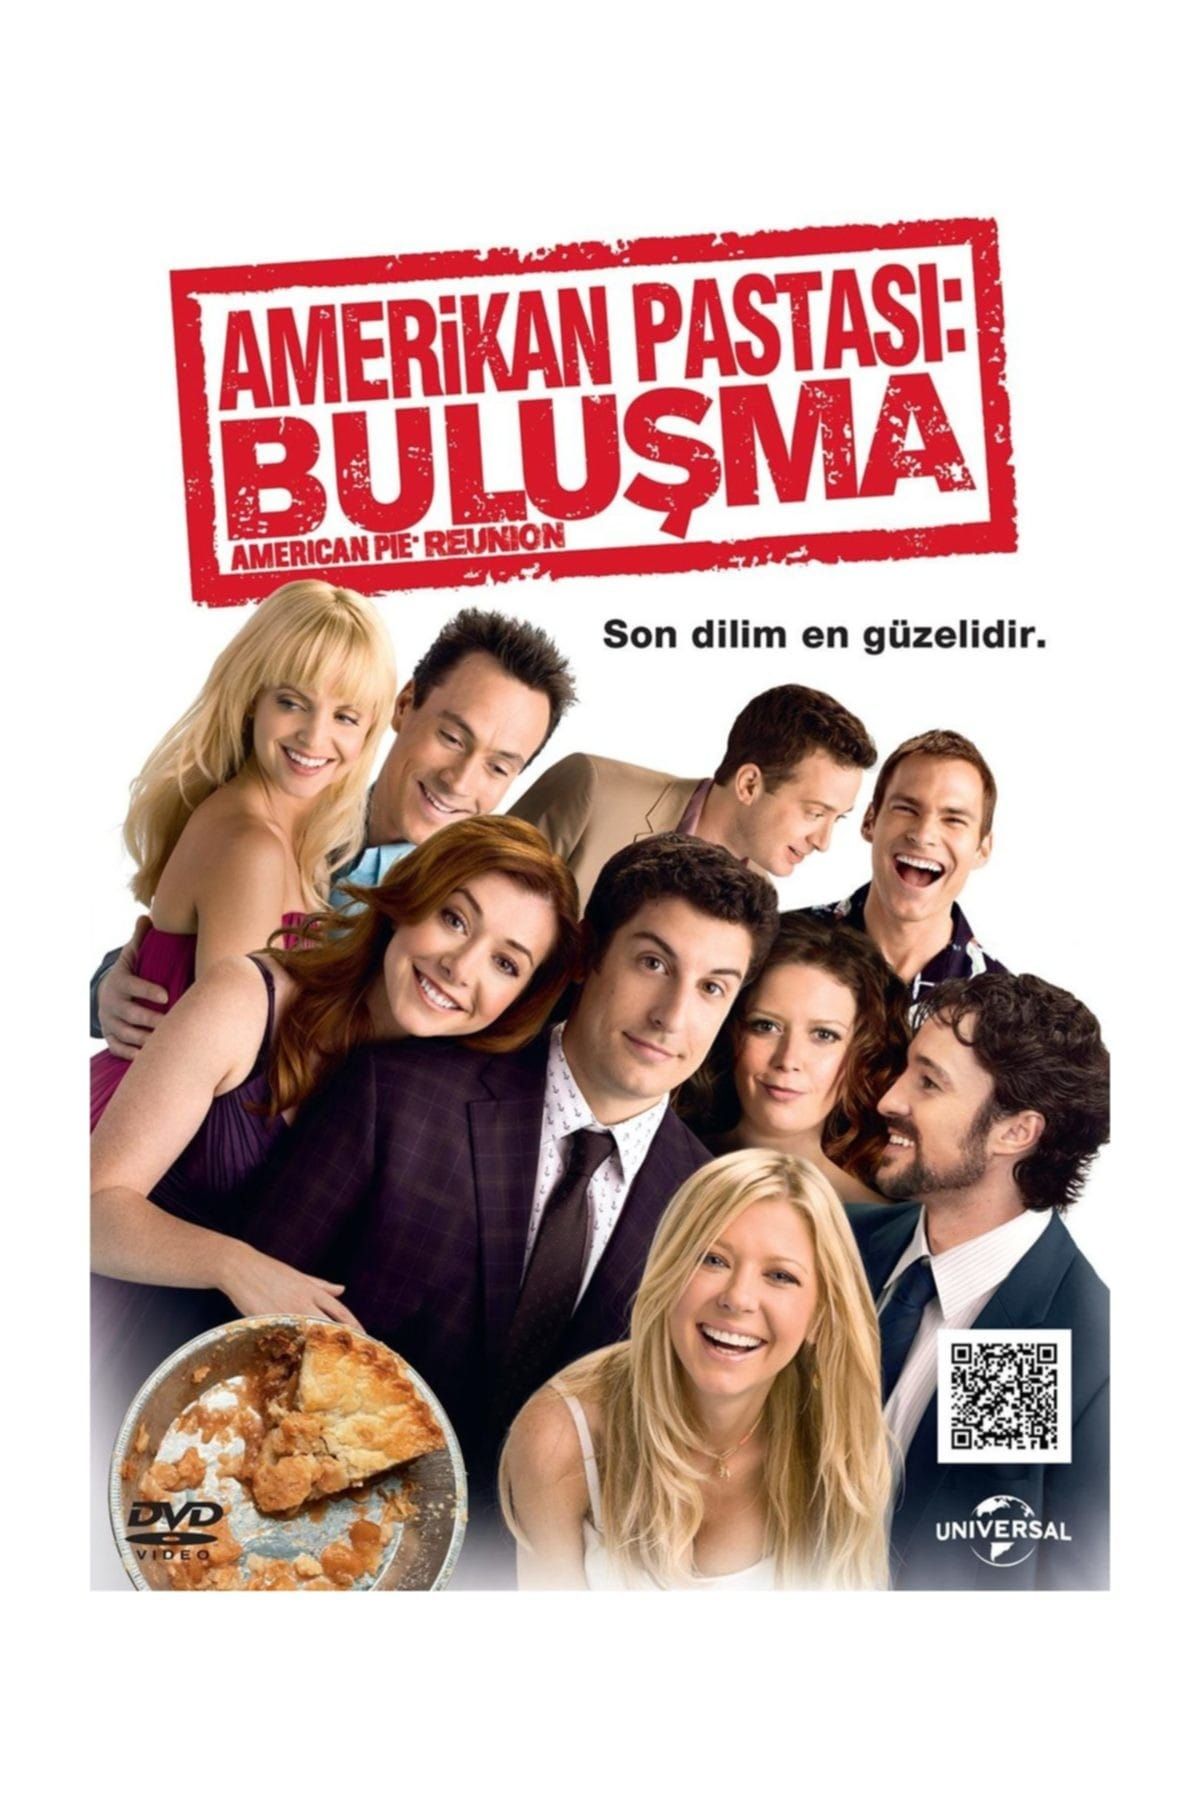 Pal DVD-Amerikan Pastası:Buluşma / American Pie Reunion